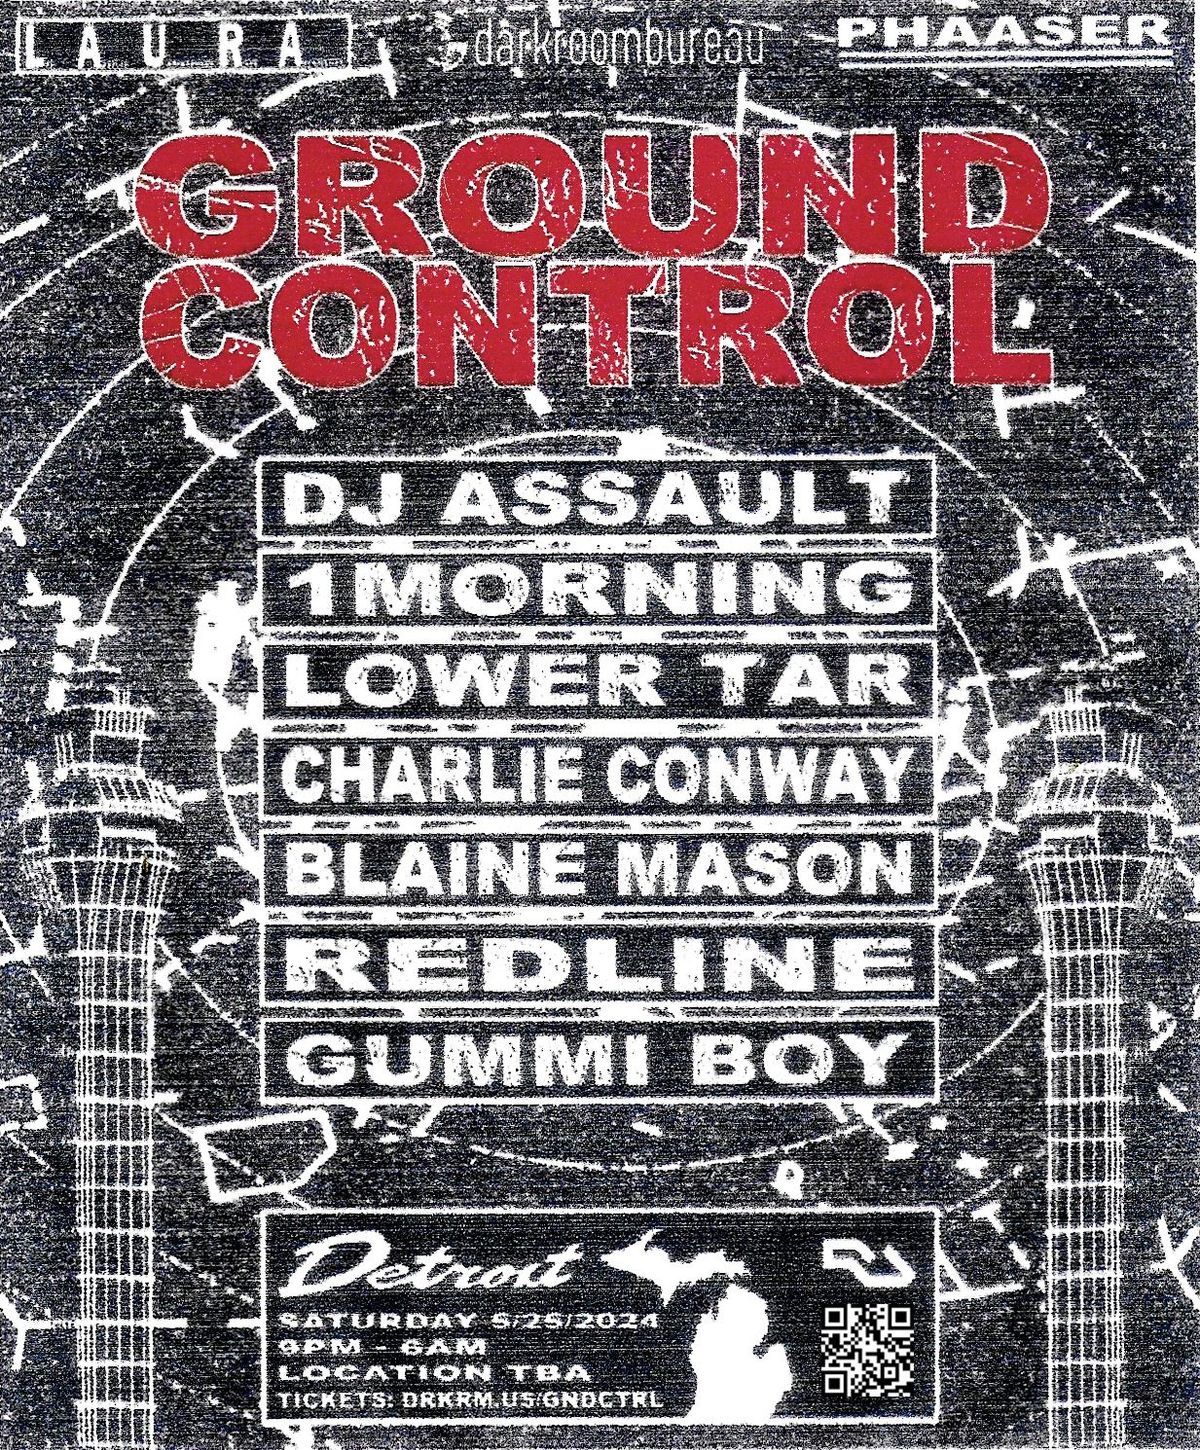 L.A.U.R.A. x PHAASER x Darkroom Bureau present GROUND CONTROL w\/ DJ Assault, 1morning, & more